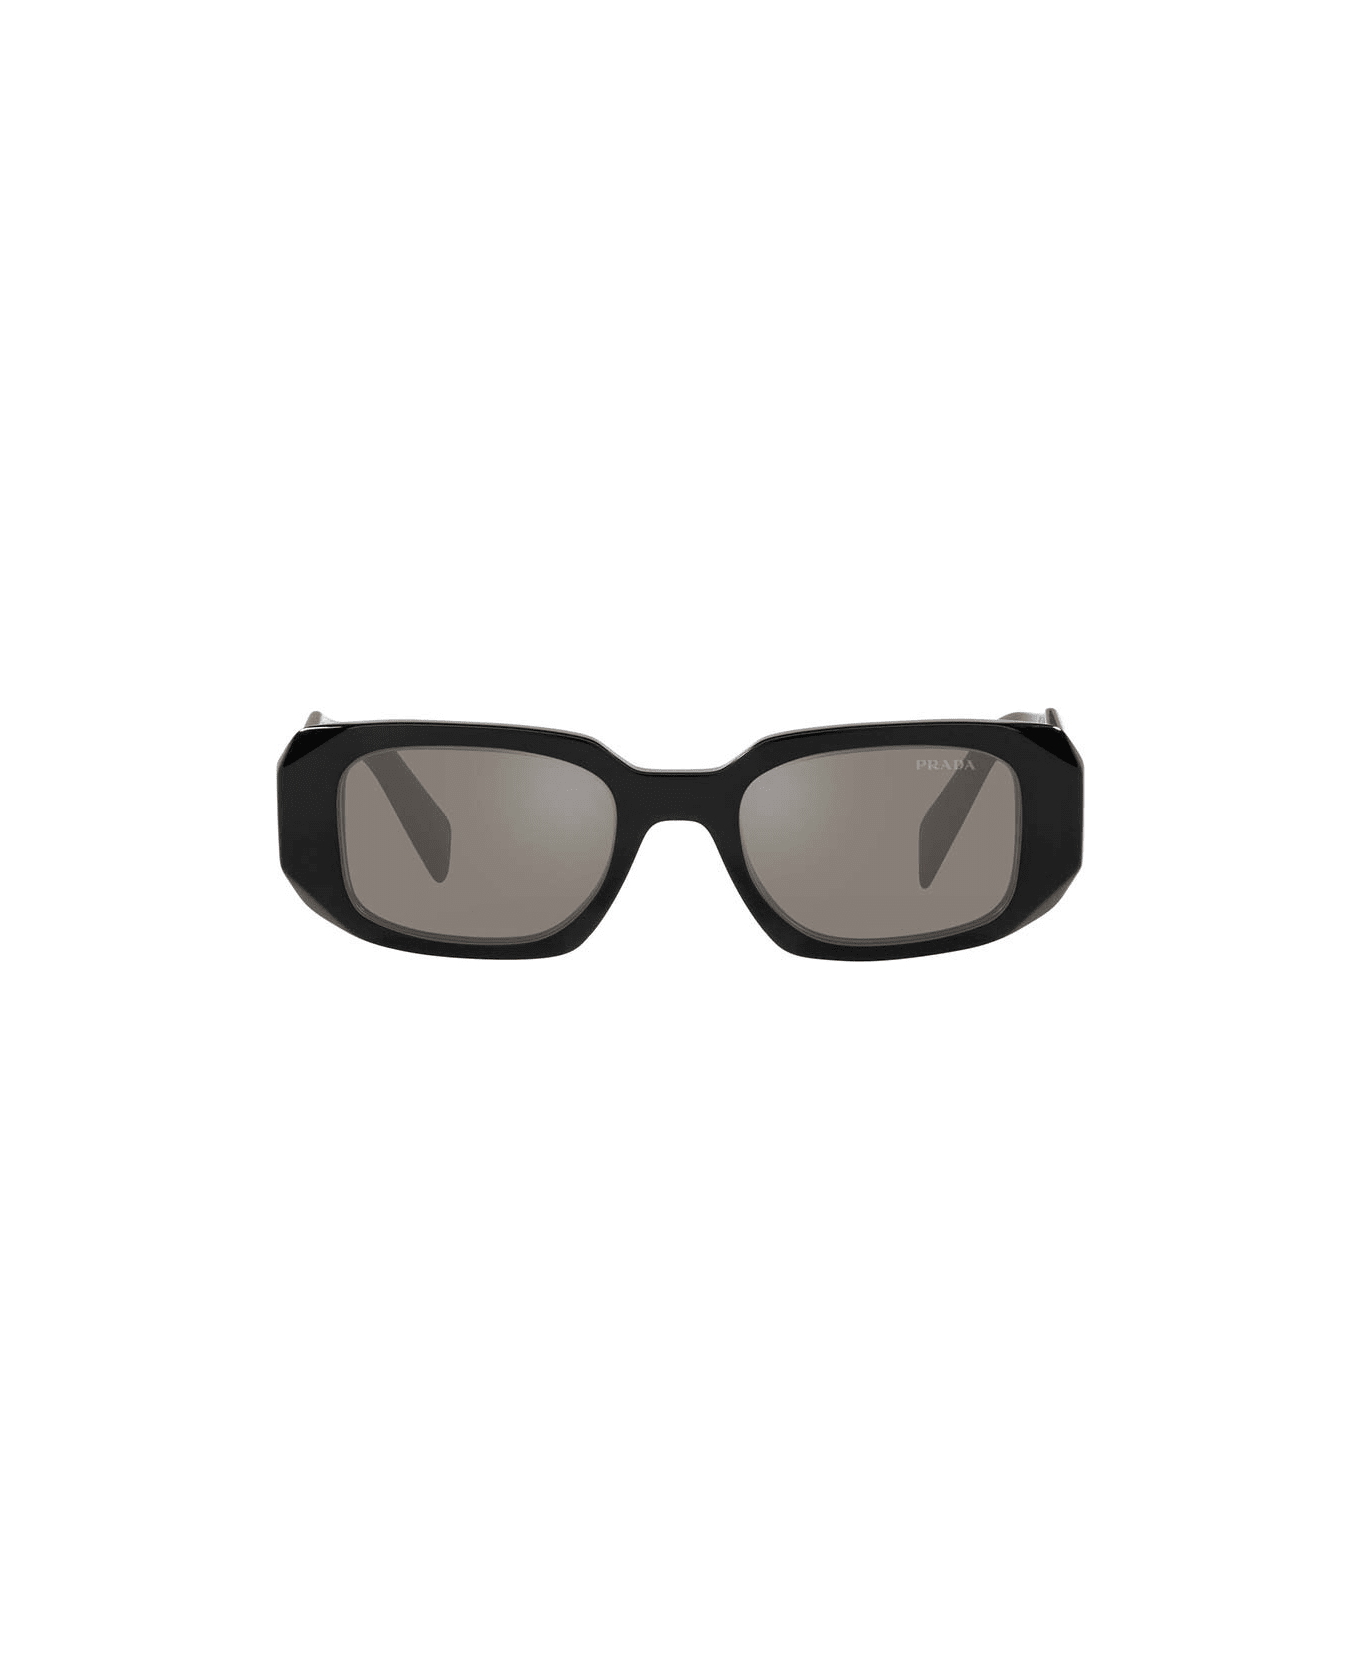 Prada Eyewear Sunglasses - Nero/Silver